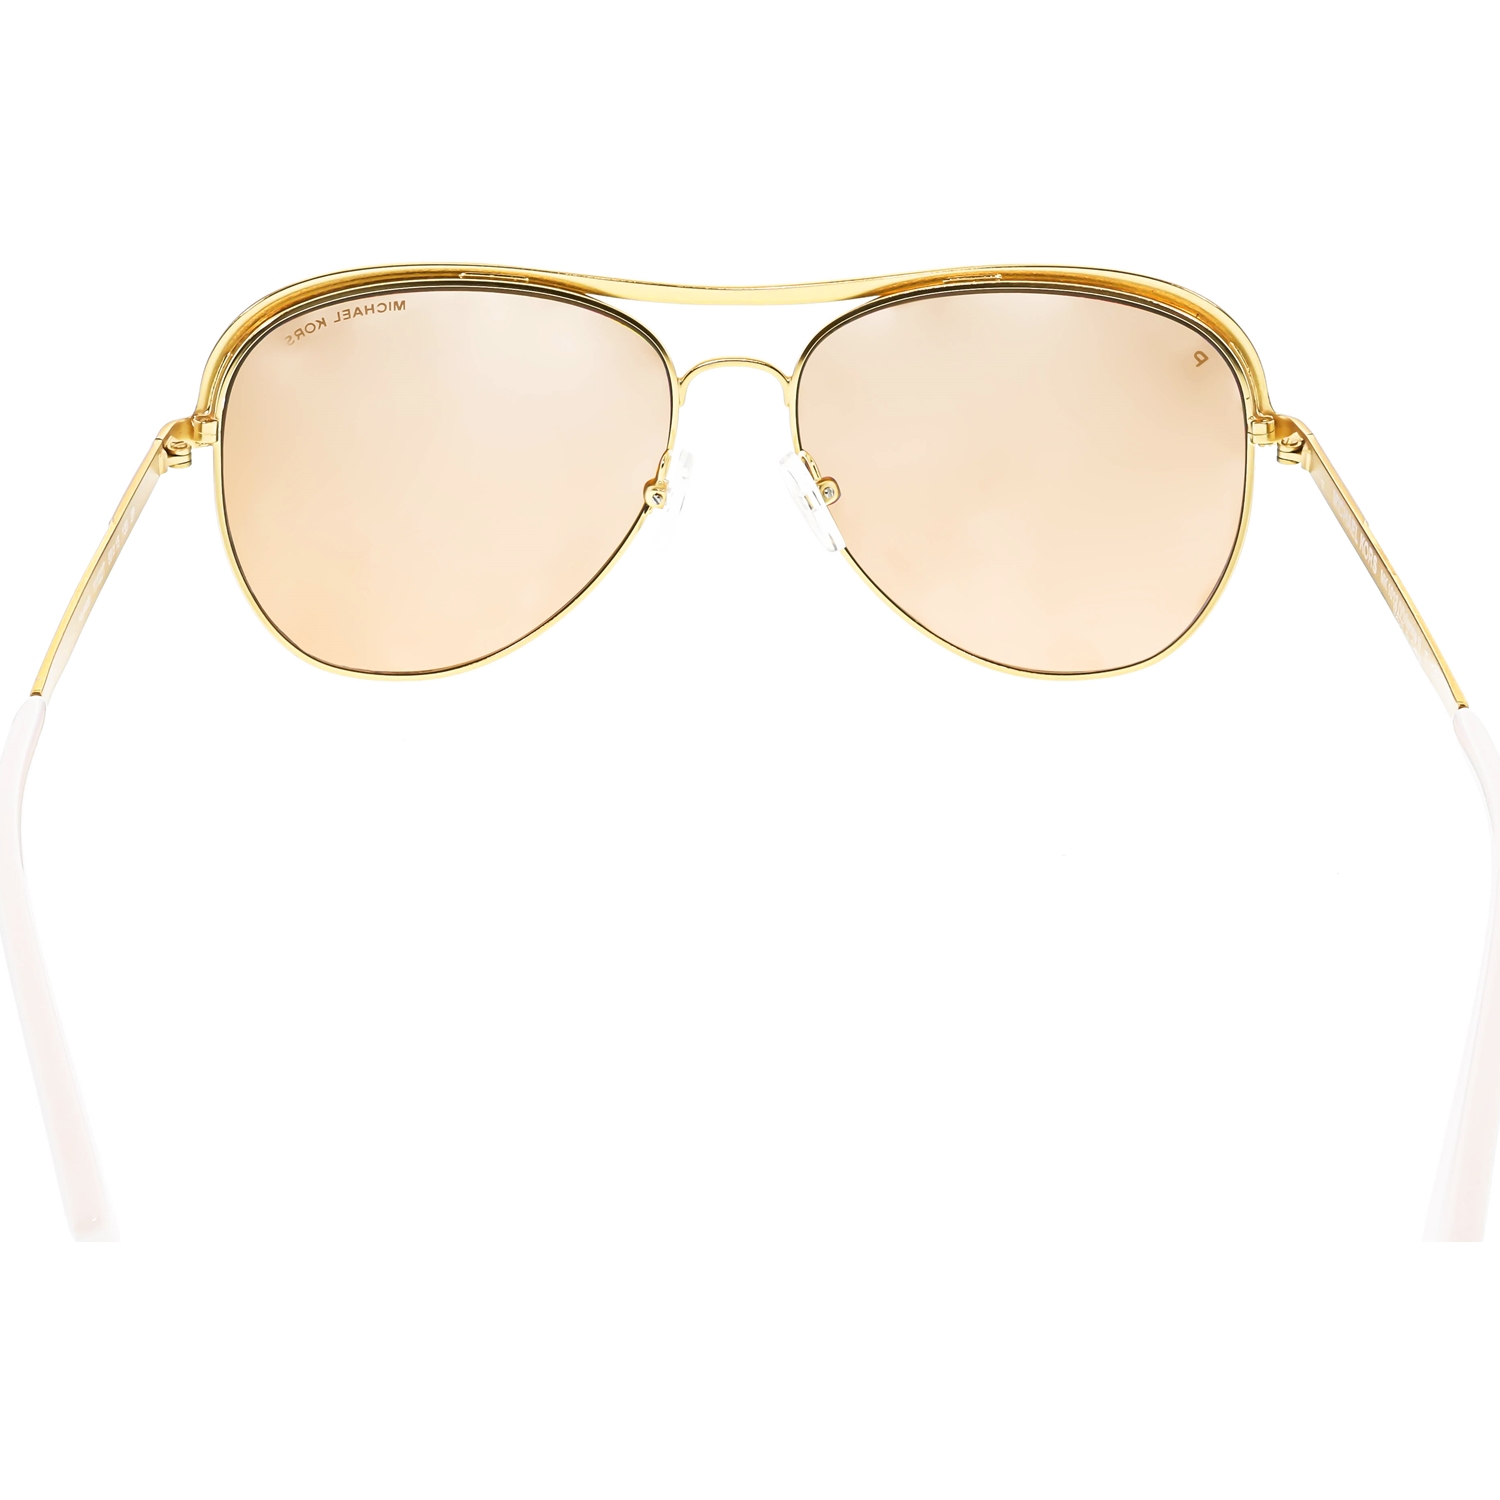 Sunglasses Michael Kors MK 1012 11122T Gold/White - image 3 of 3